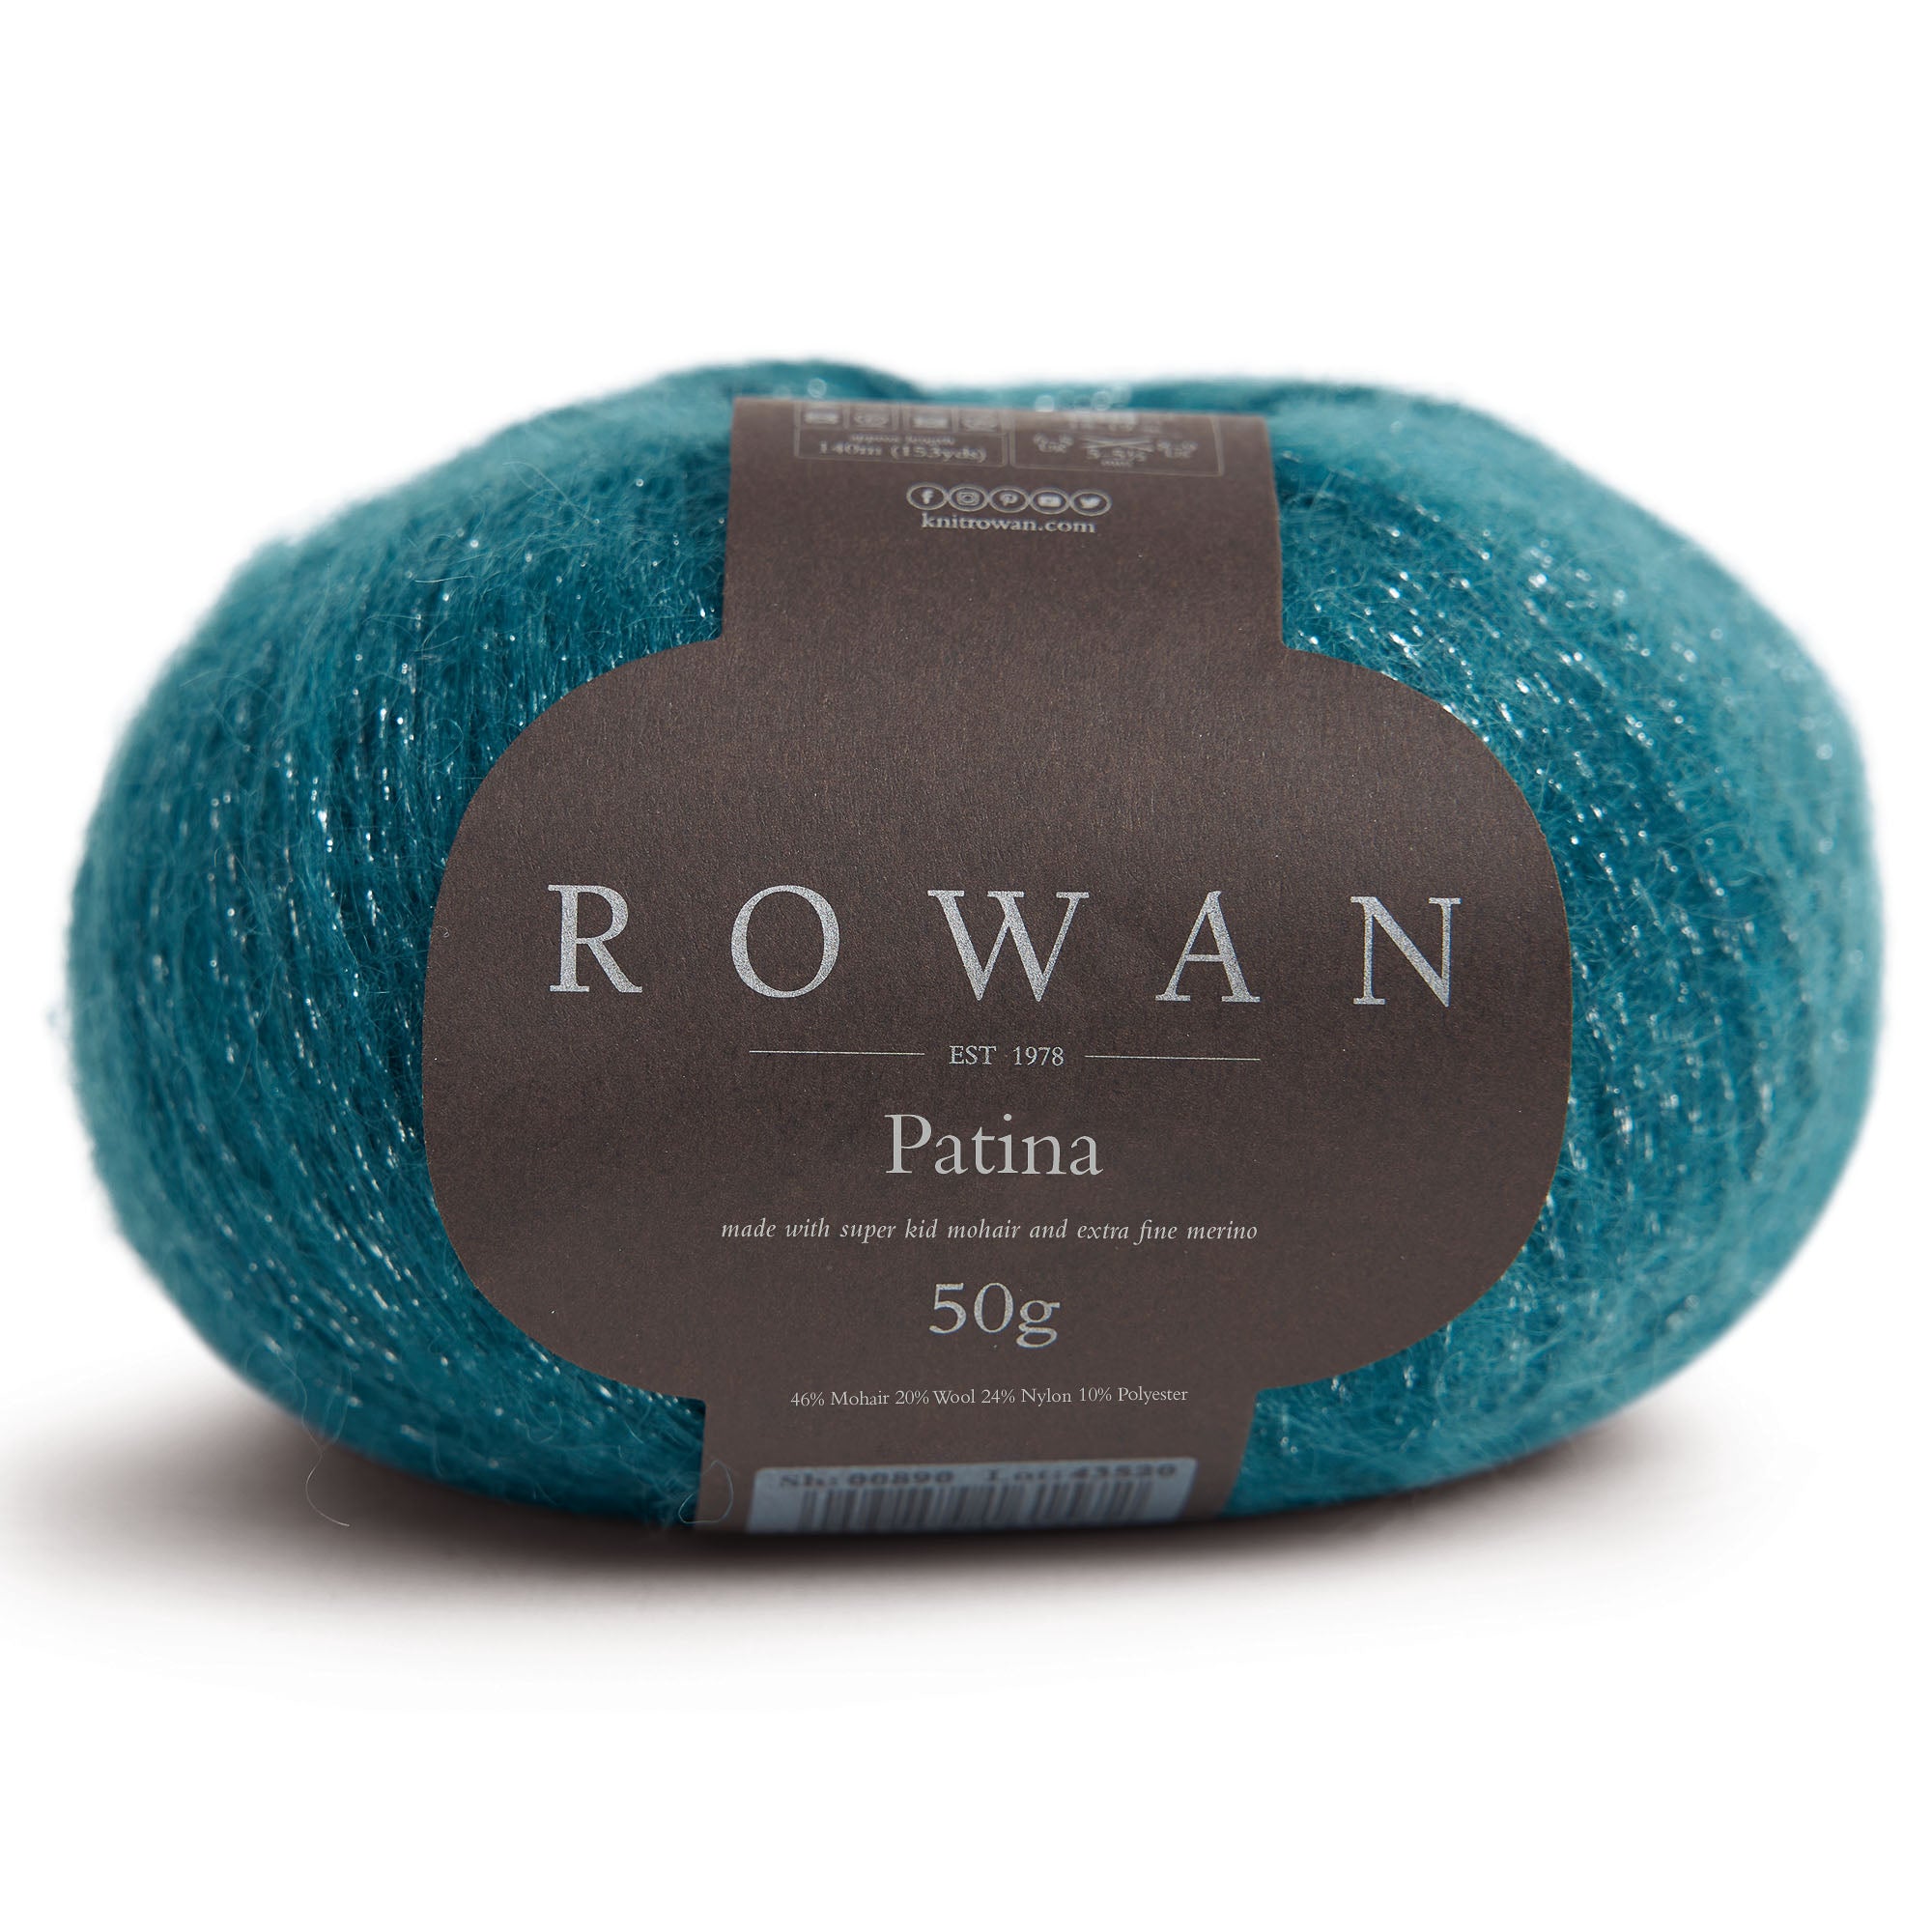 Rowan Cotton Cashmere  WoolWinders Yarn Shop